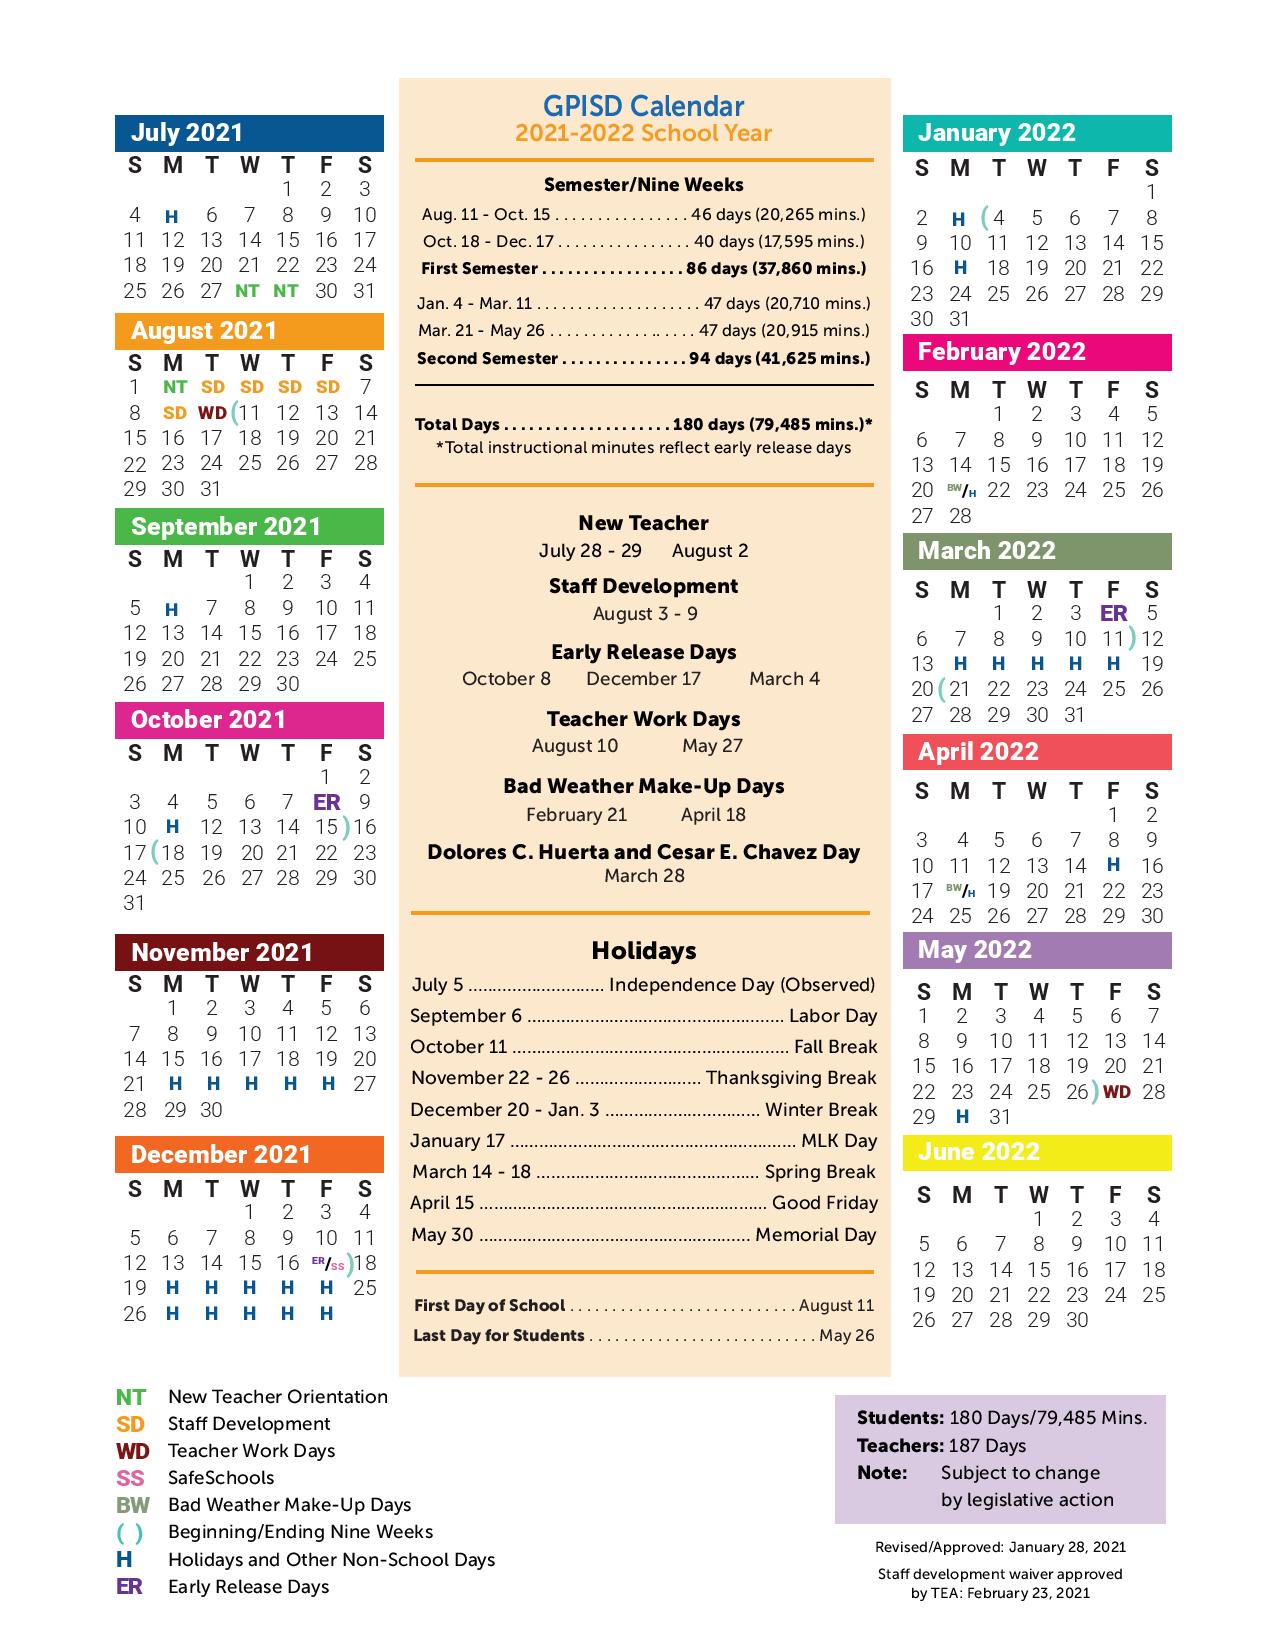 Galena Park Isd Calendar 2022 2023 Grand Prairie Independent School District Calendar 2021-2022